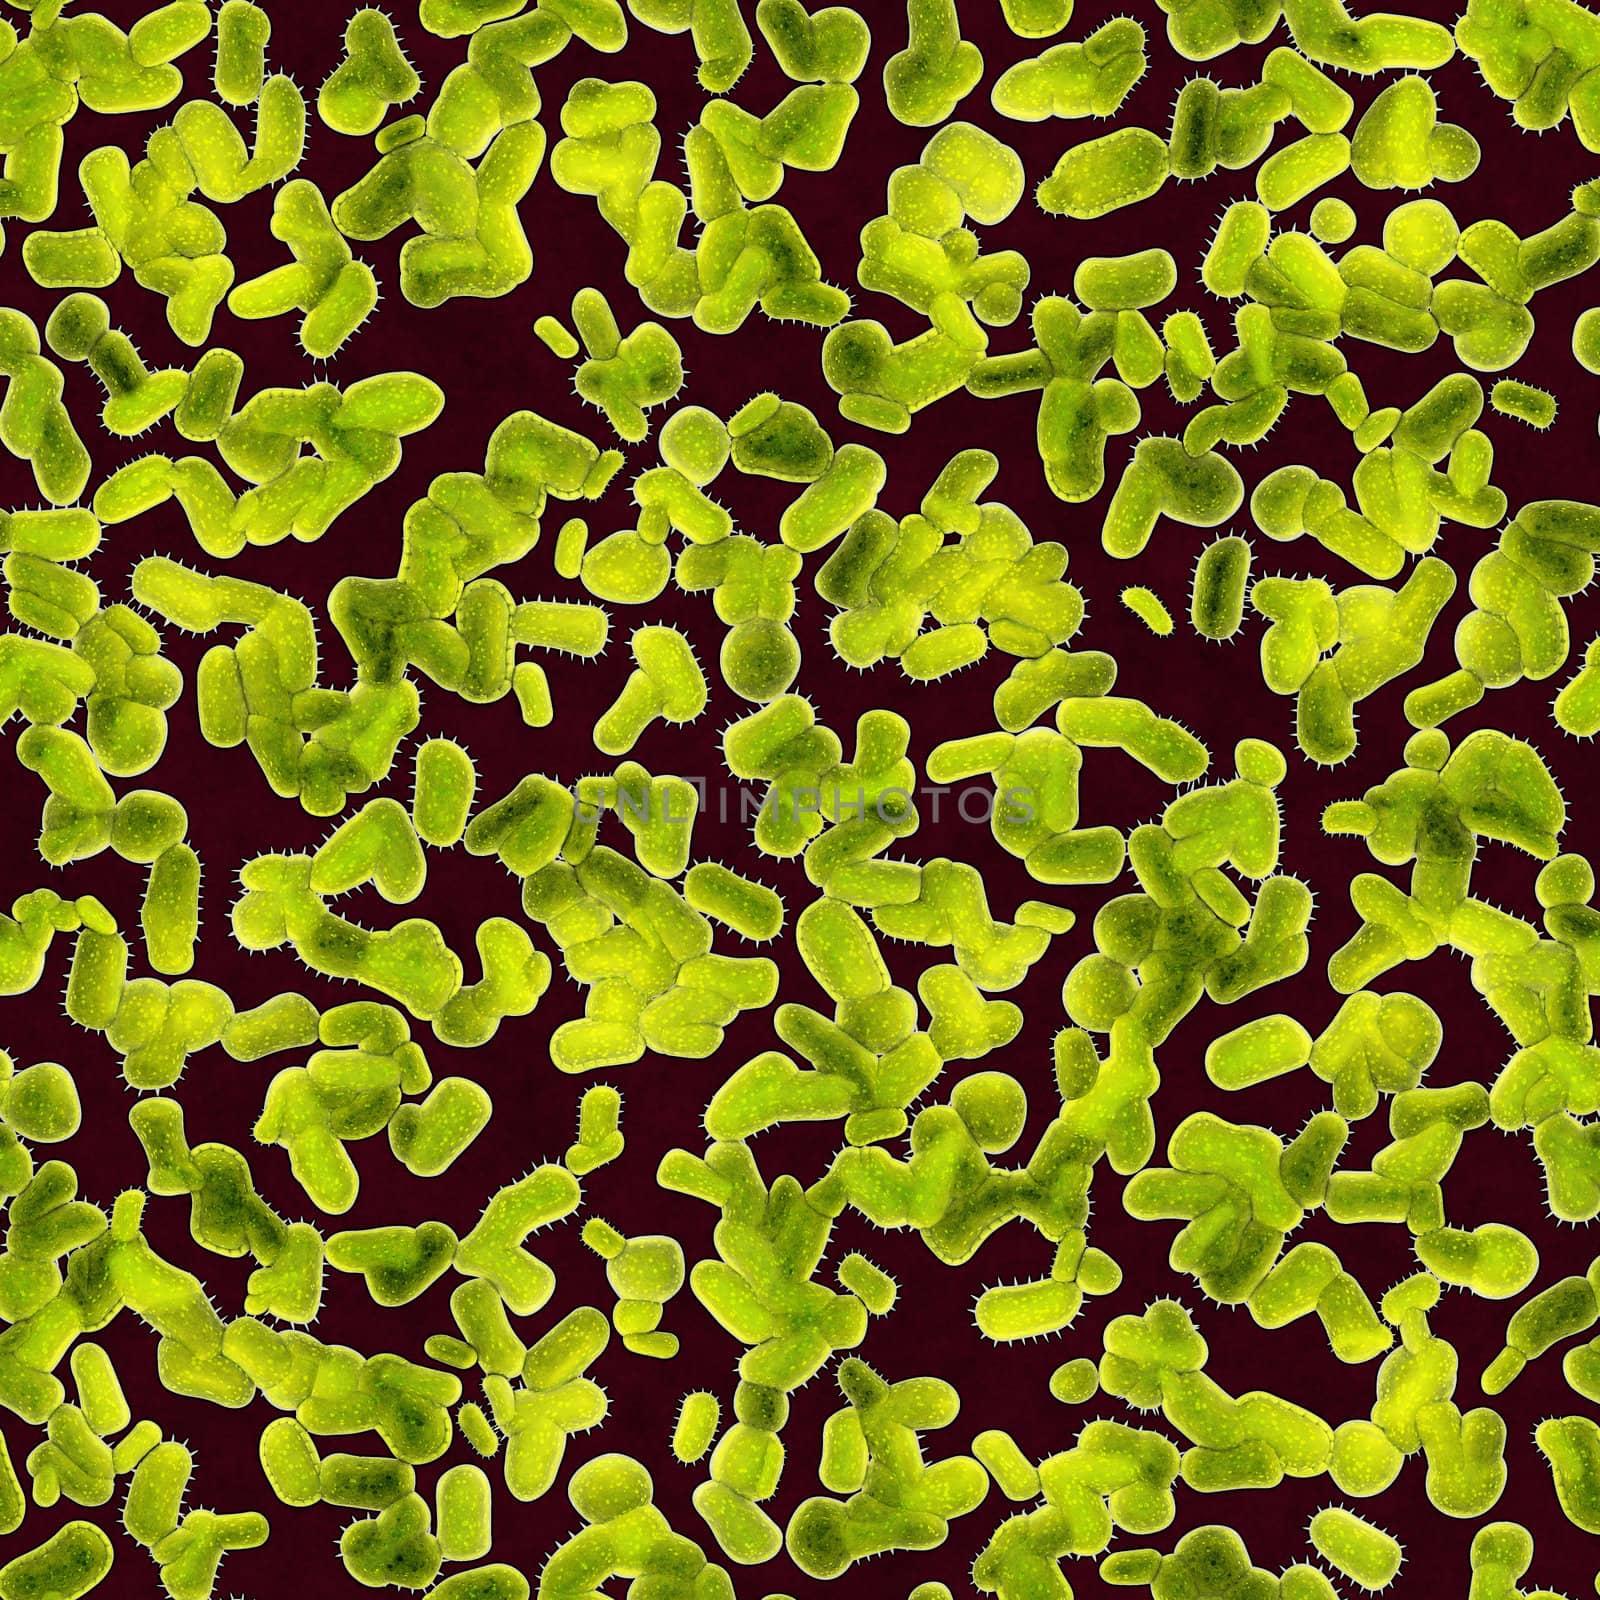 3d render illustration of colorful bacteria